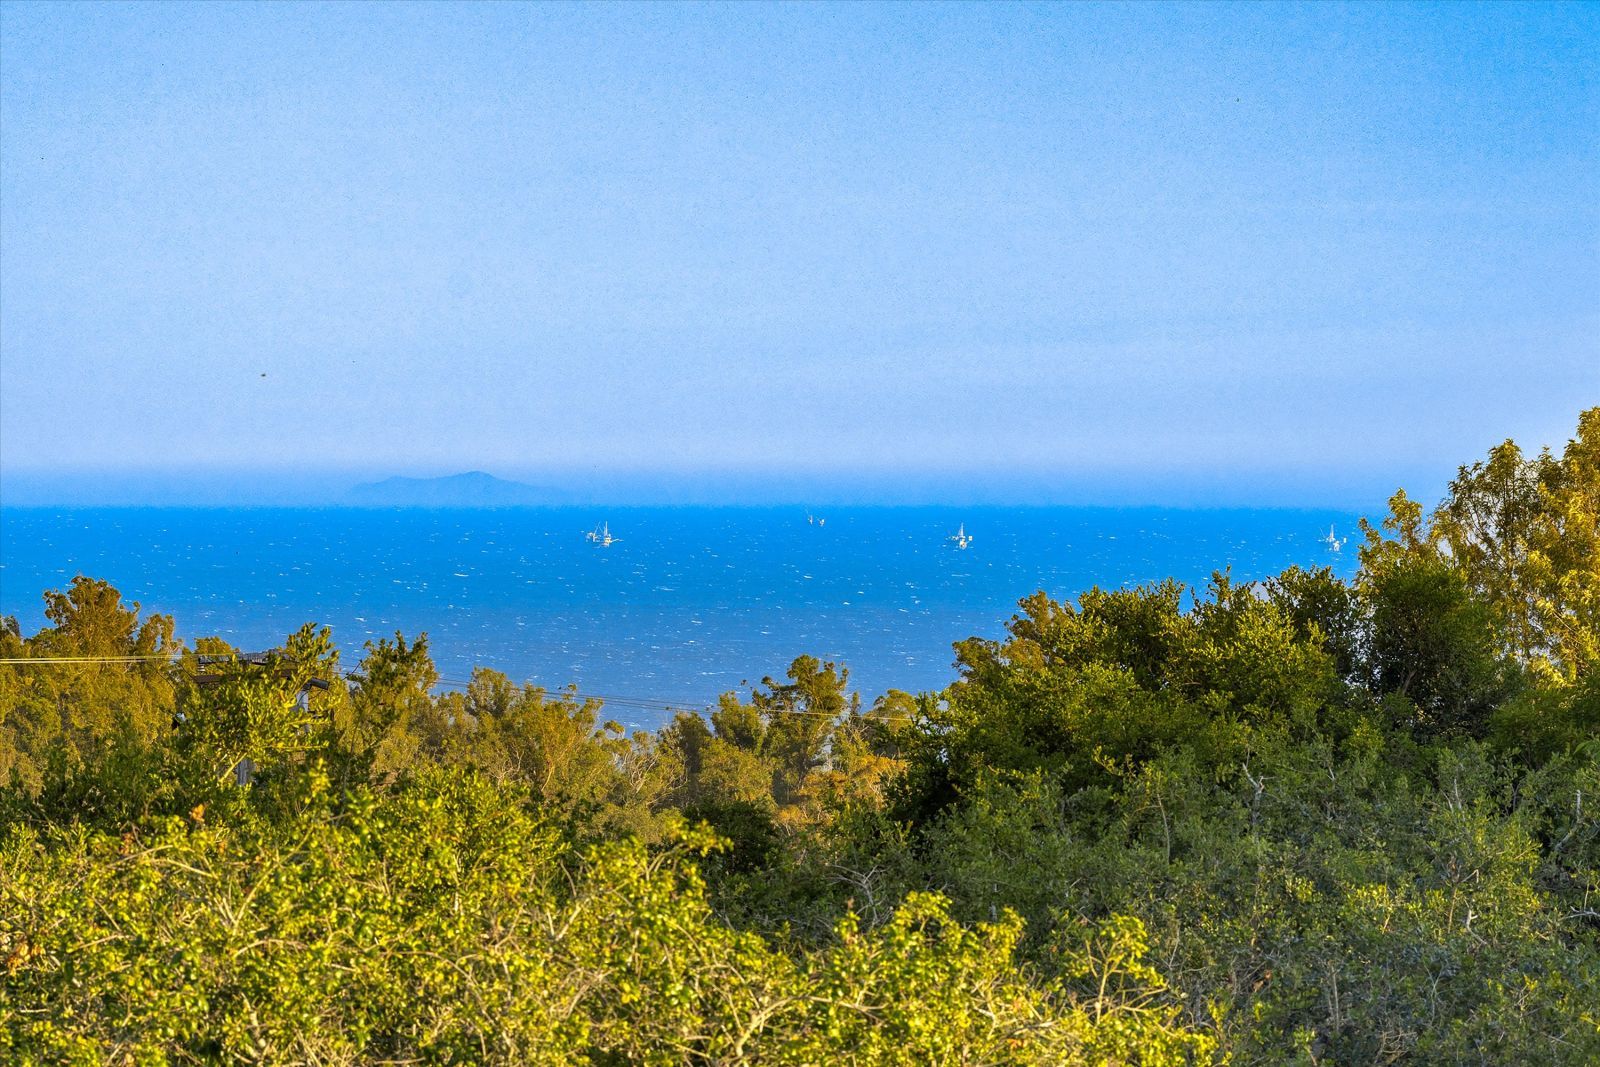 A view of the ocean and blue sky through verdant foliage.